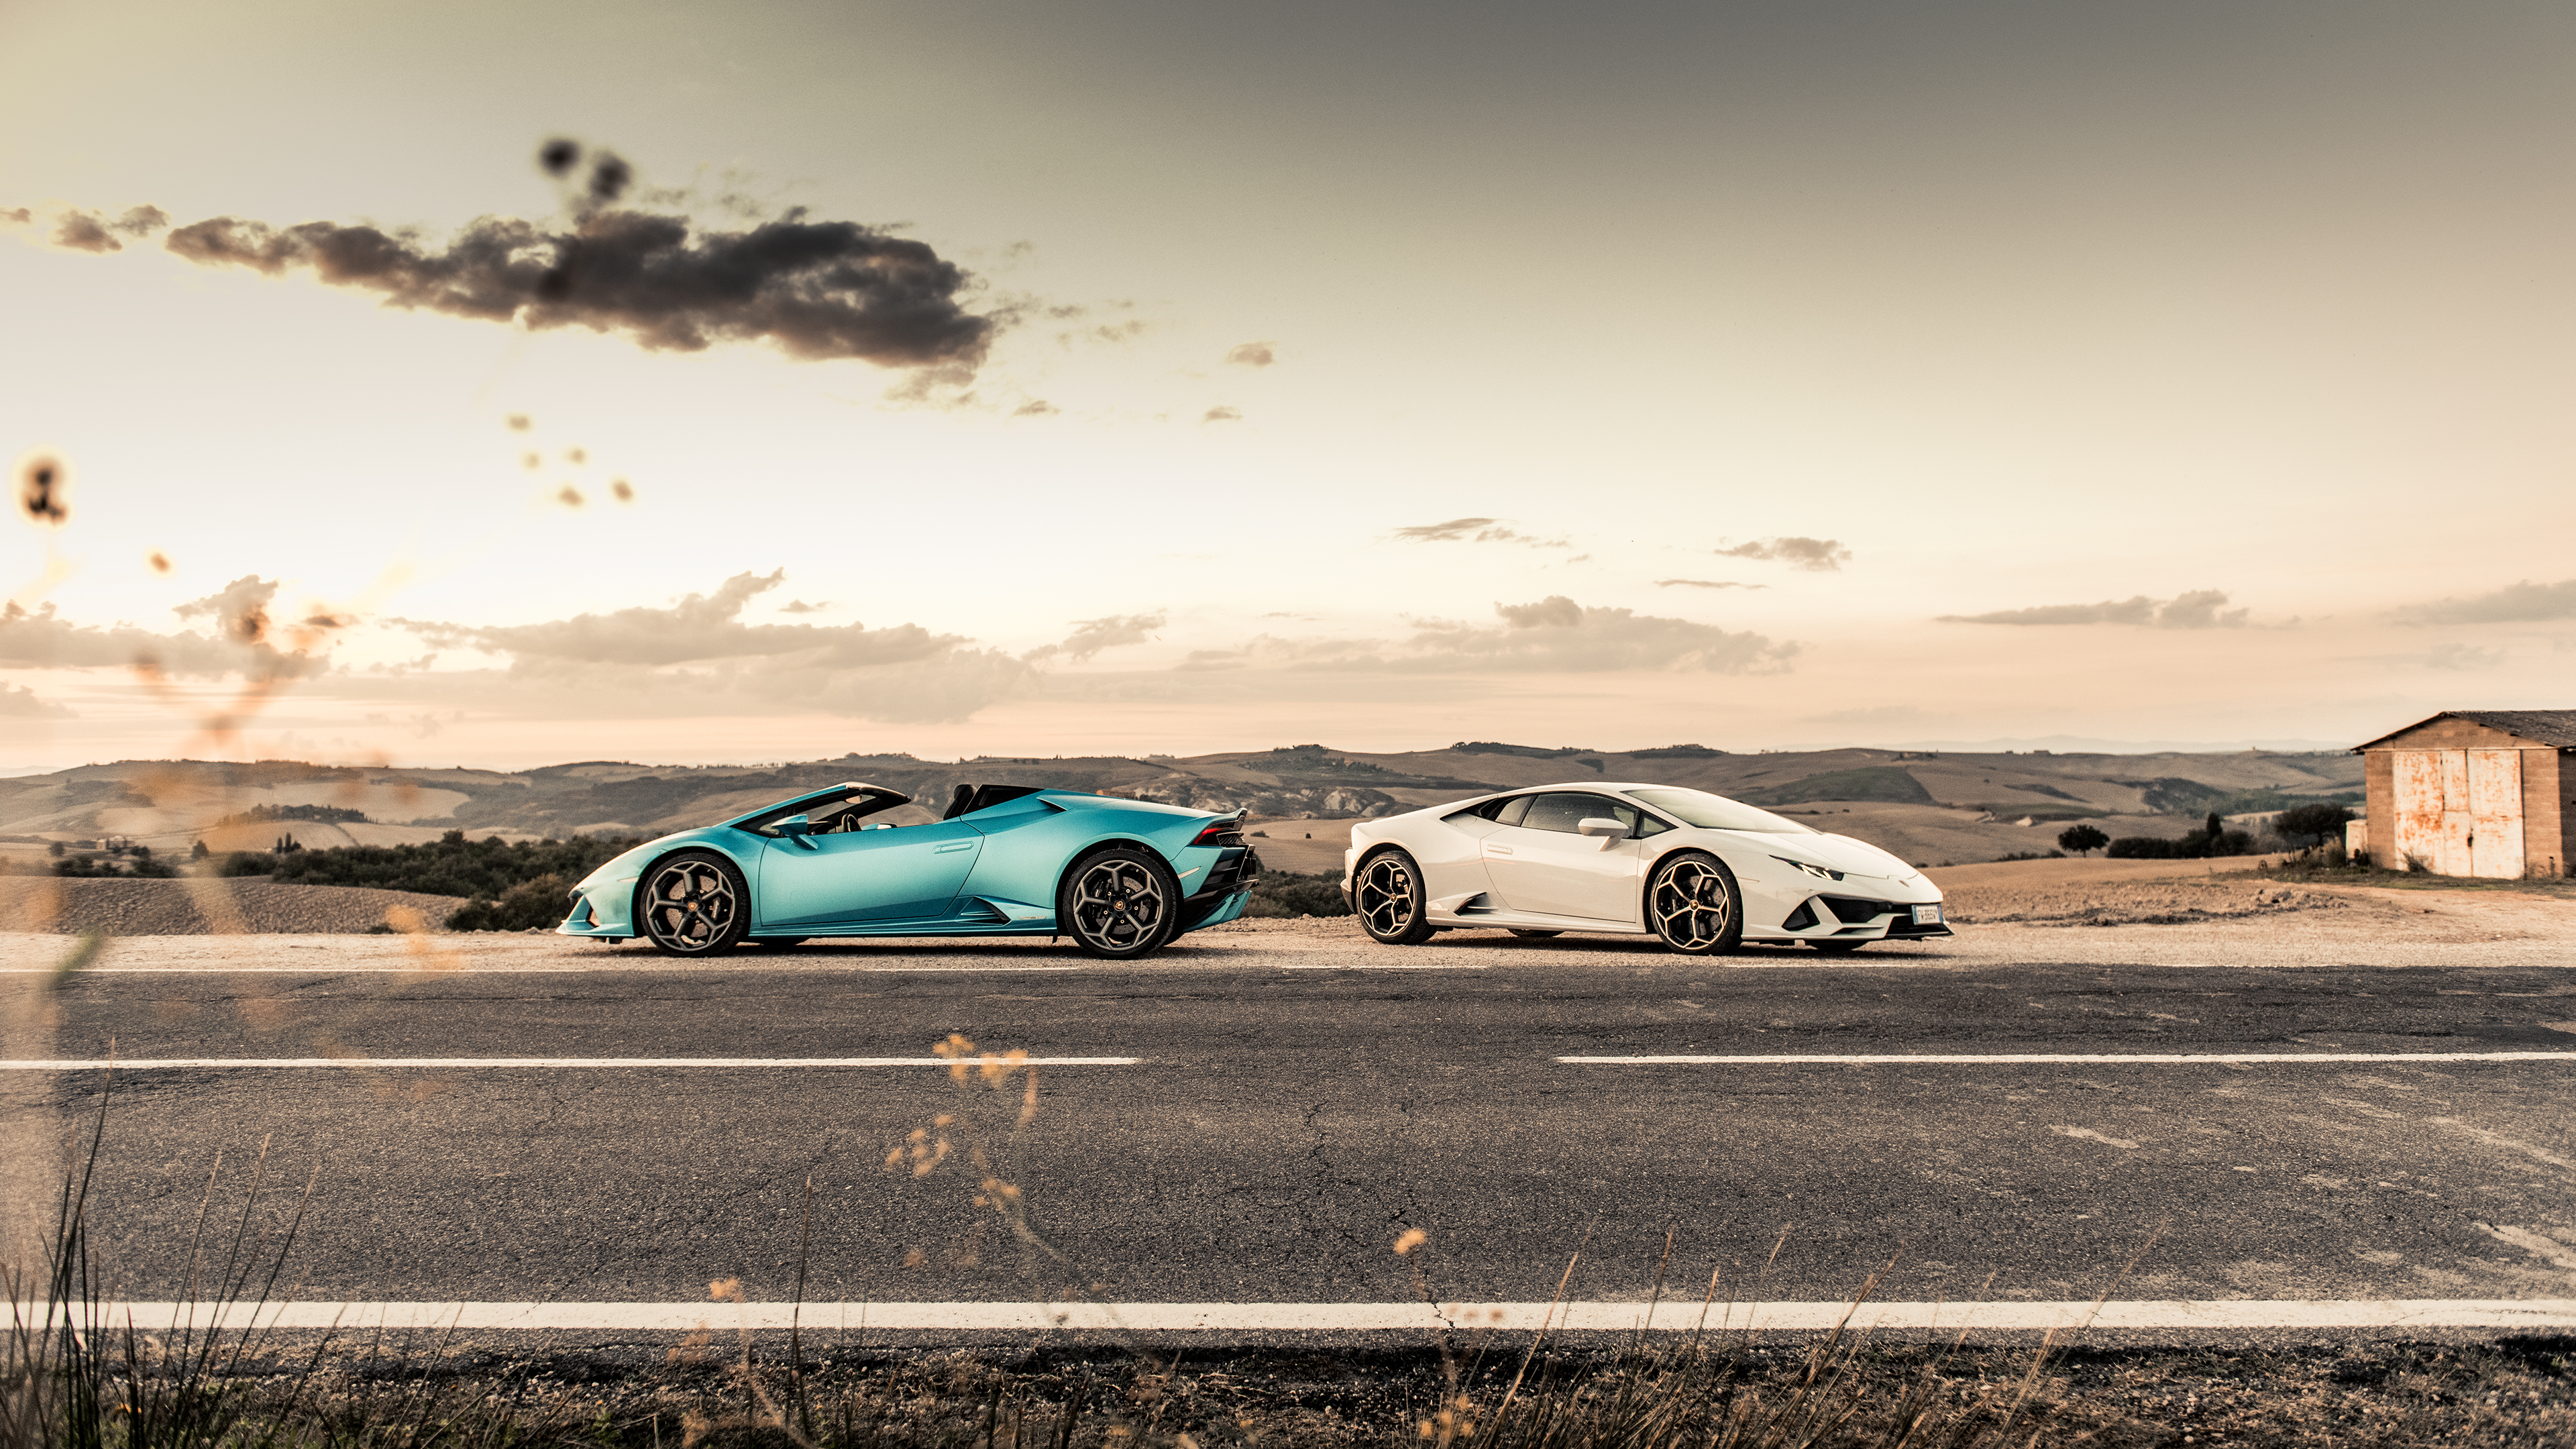 Обои Lamborghini Huracan Lamborghini автомобили 2020 года - бесплатные картинки на Fonwall